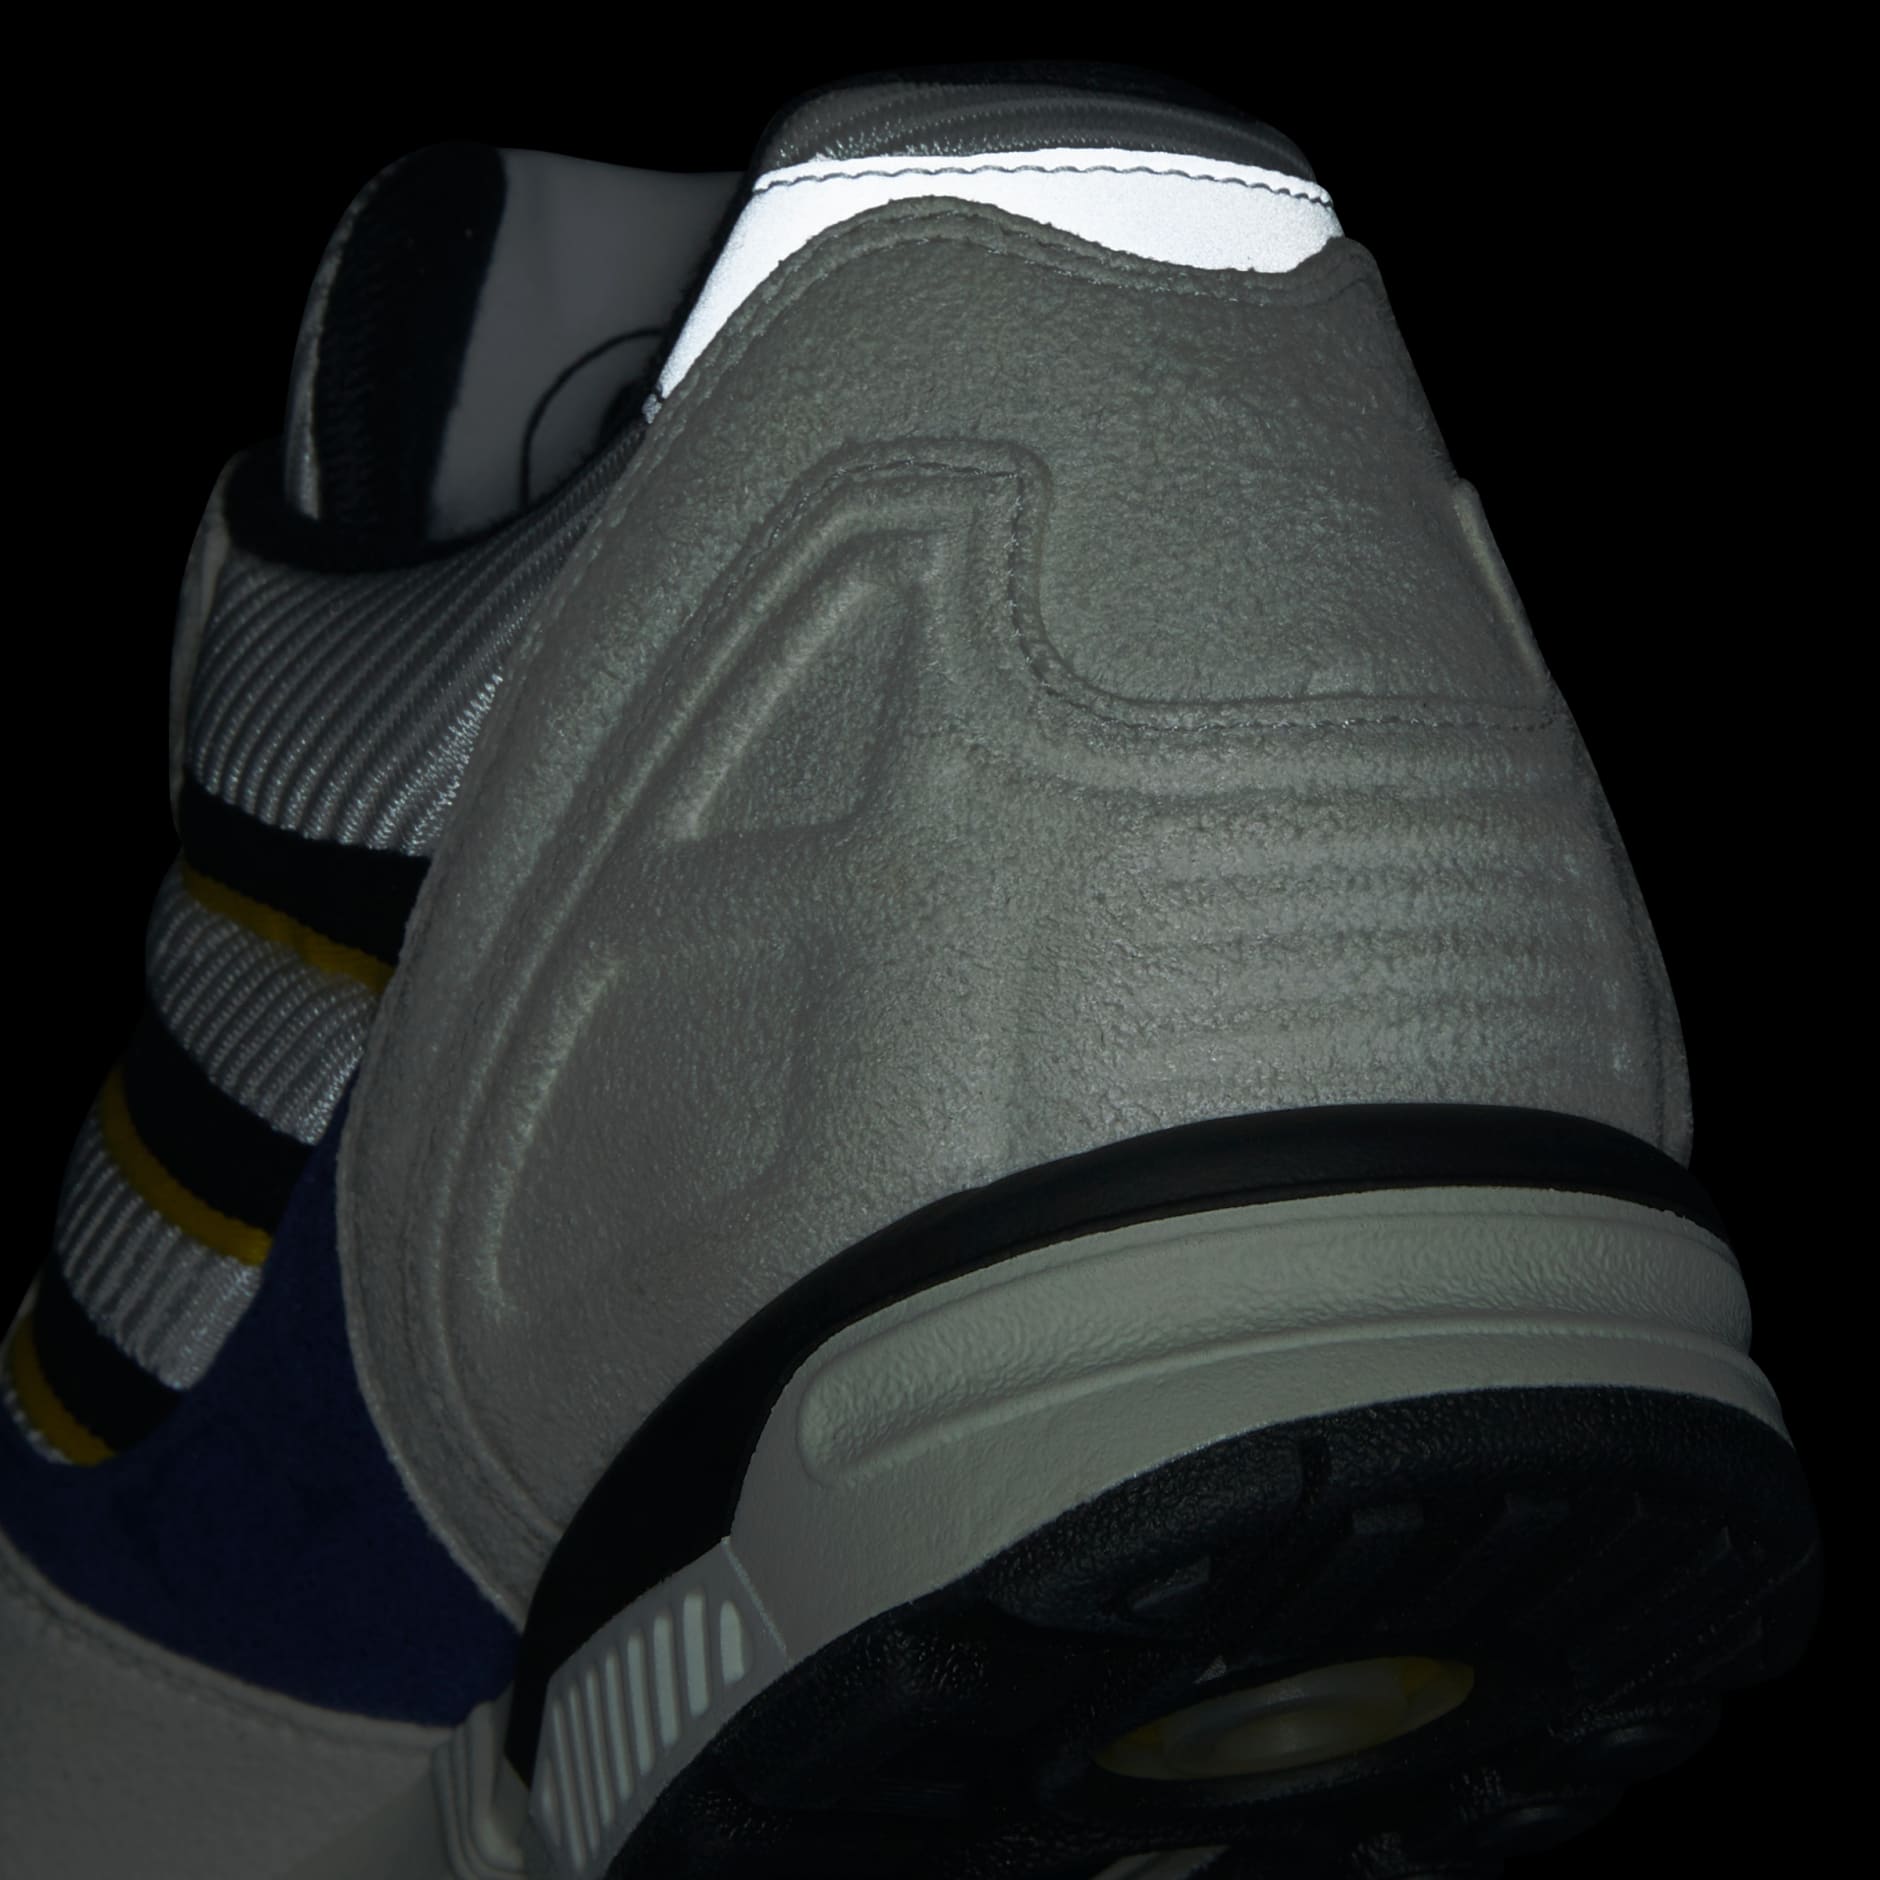 Shoes - Civilist ZX 6001 B Shoes - White | adidas Qatar